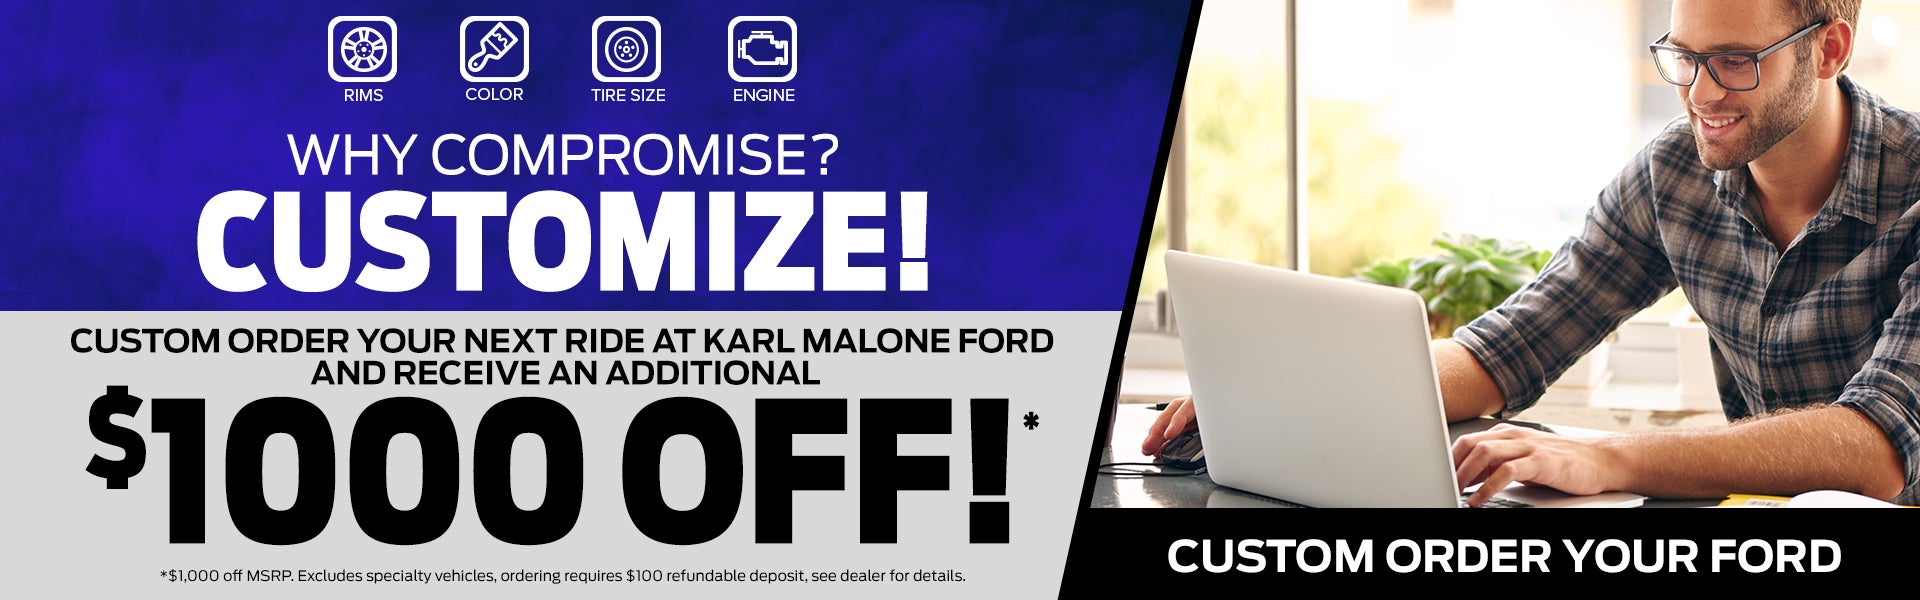 Custom Order at Karl Malone Ford